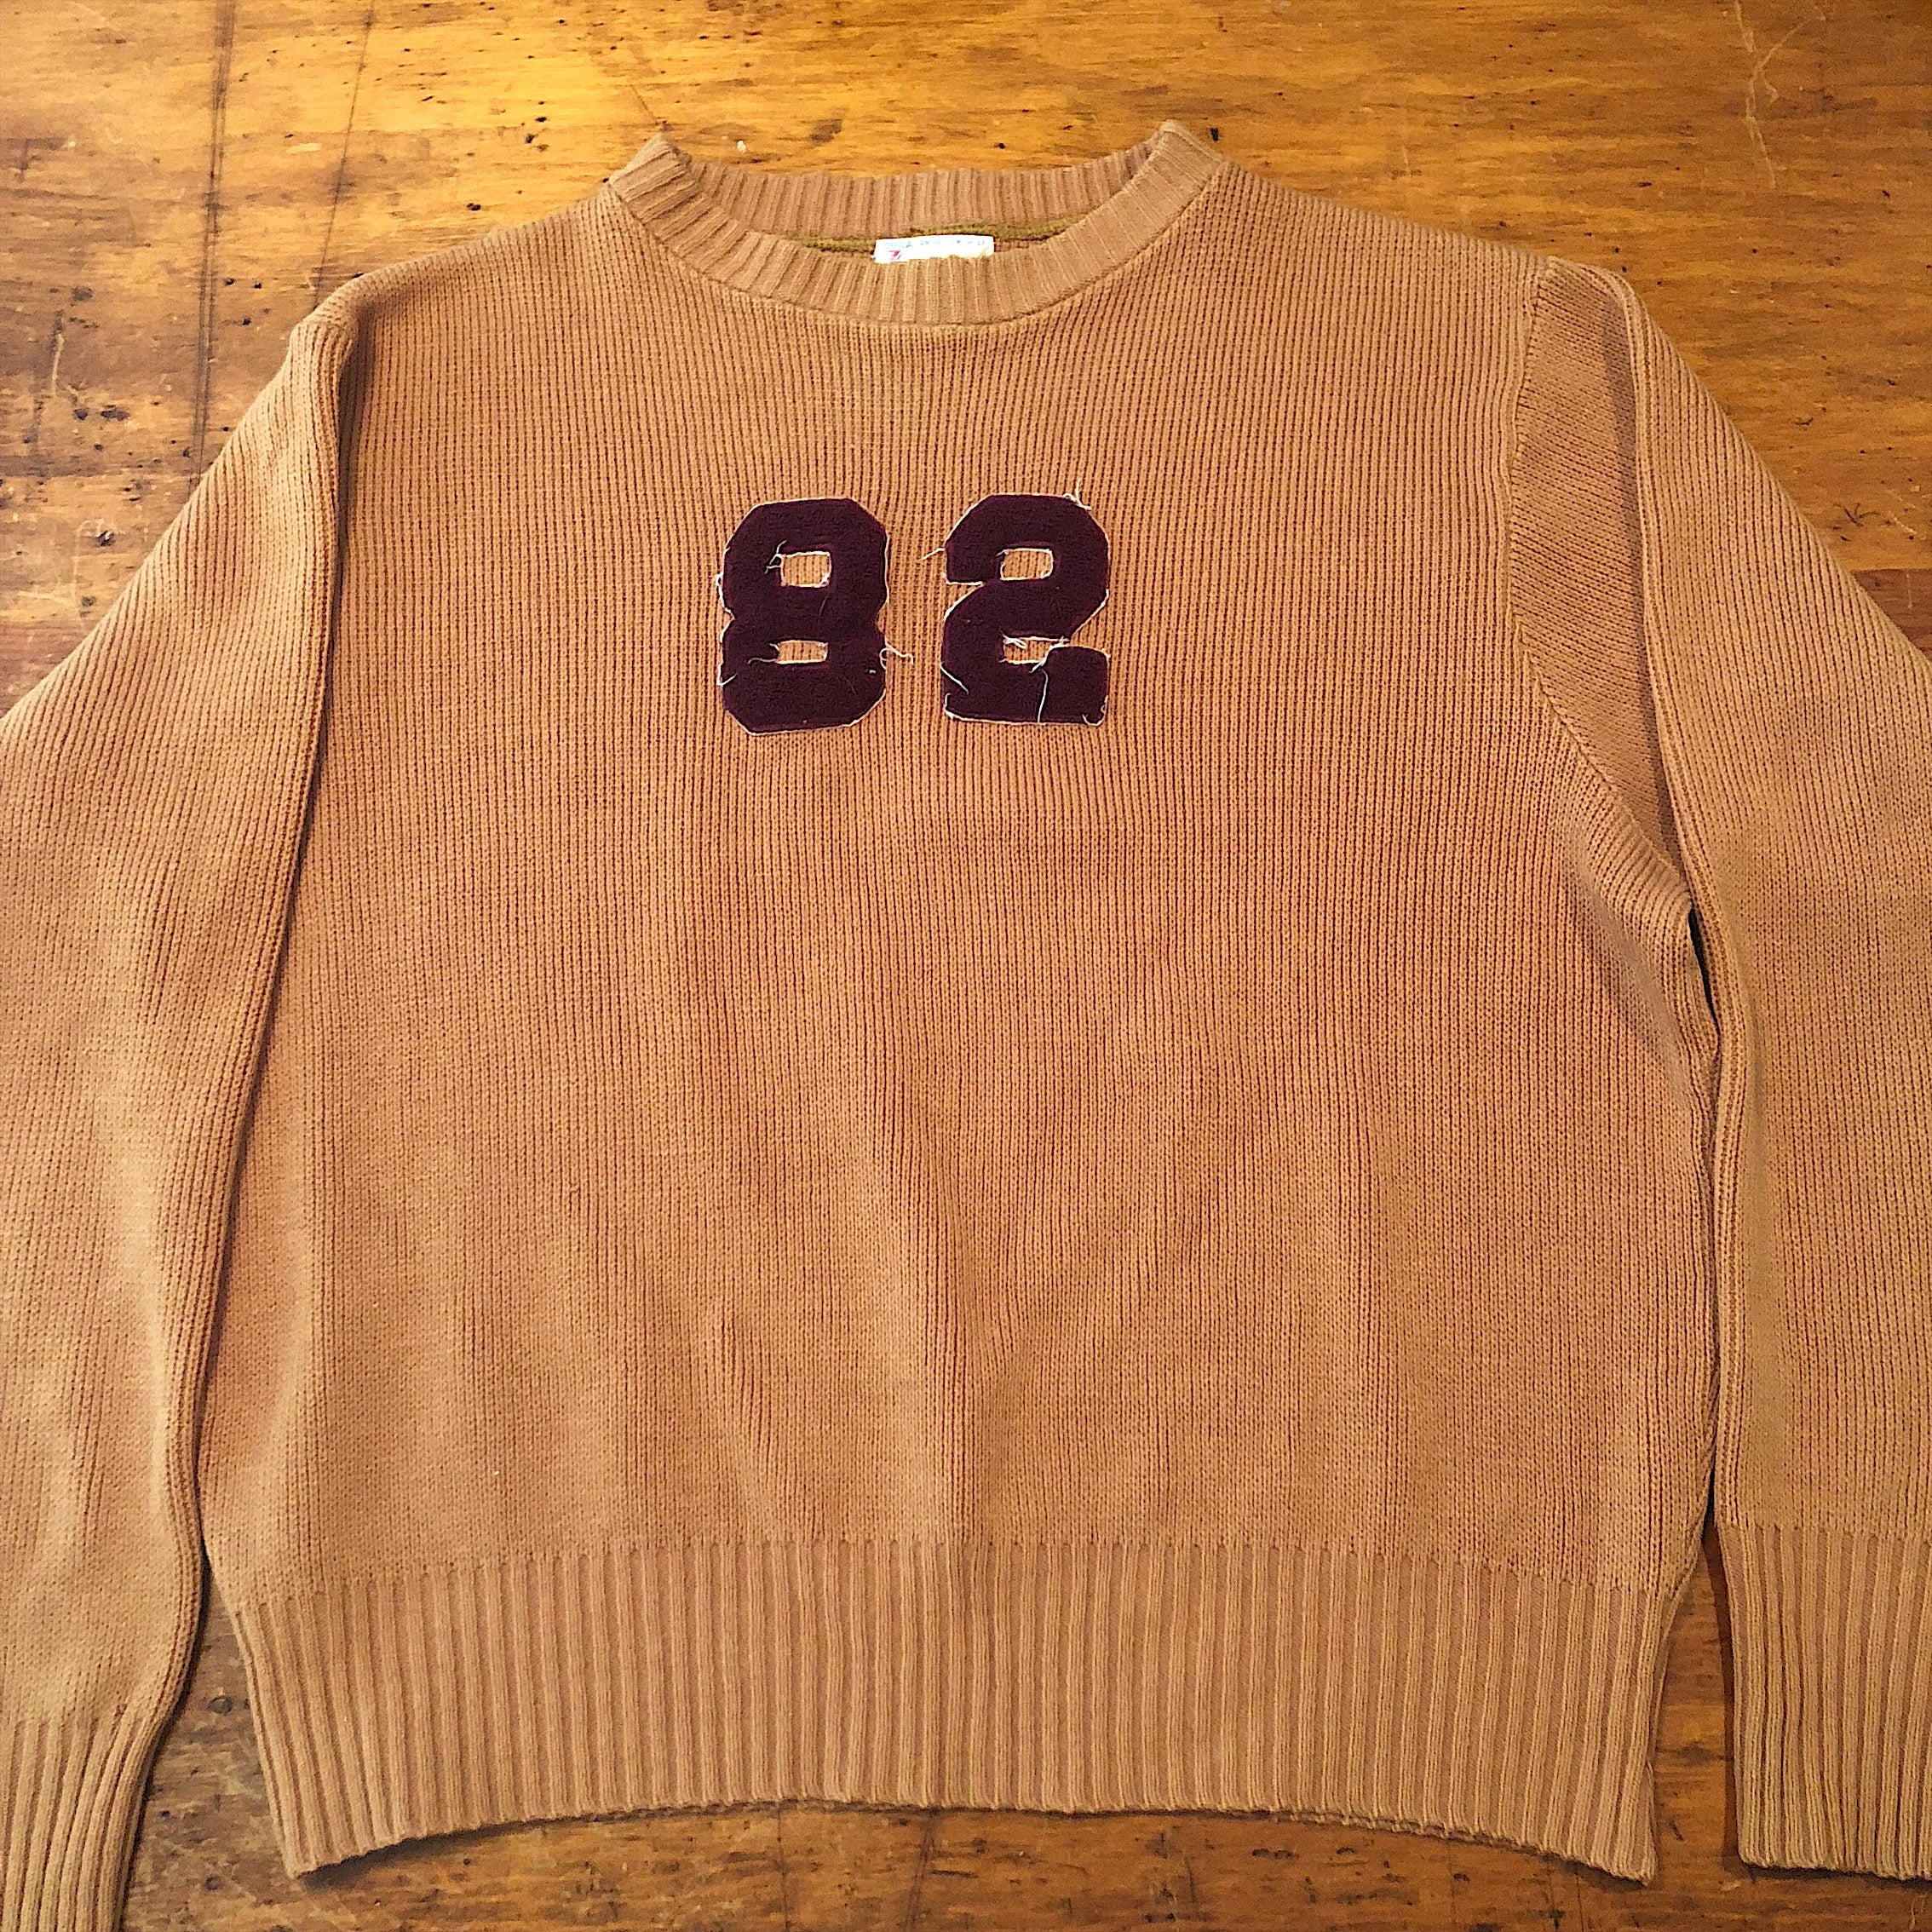 Vintage Varsity Sweater by East-Tenn  -  1960s or 70s - Orlon Acrylic - University of Minnesota - XXL? -Gold pullover